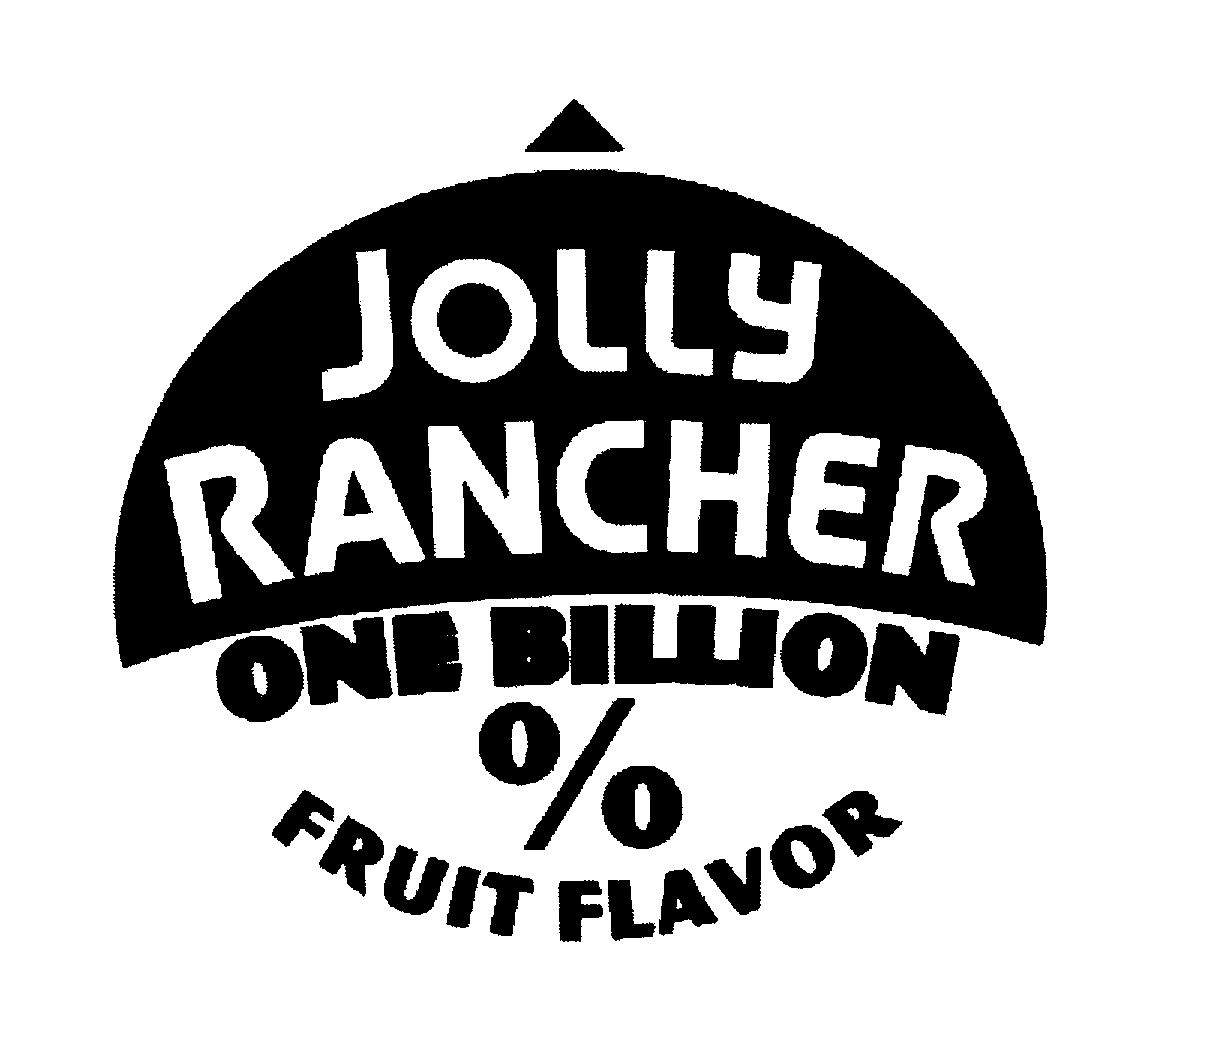  JOLLY RANCHER ONE BILLION FRUIT FLAVOR